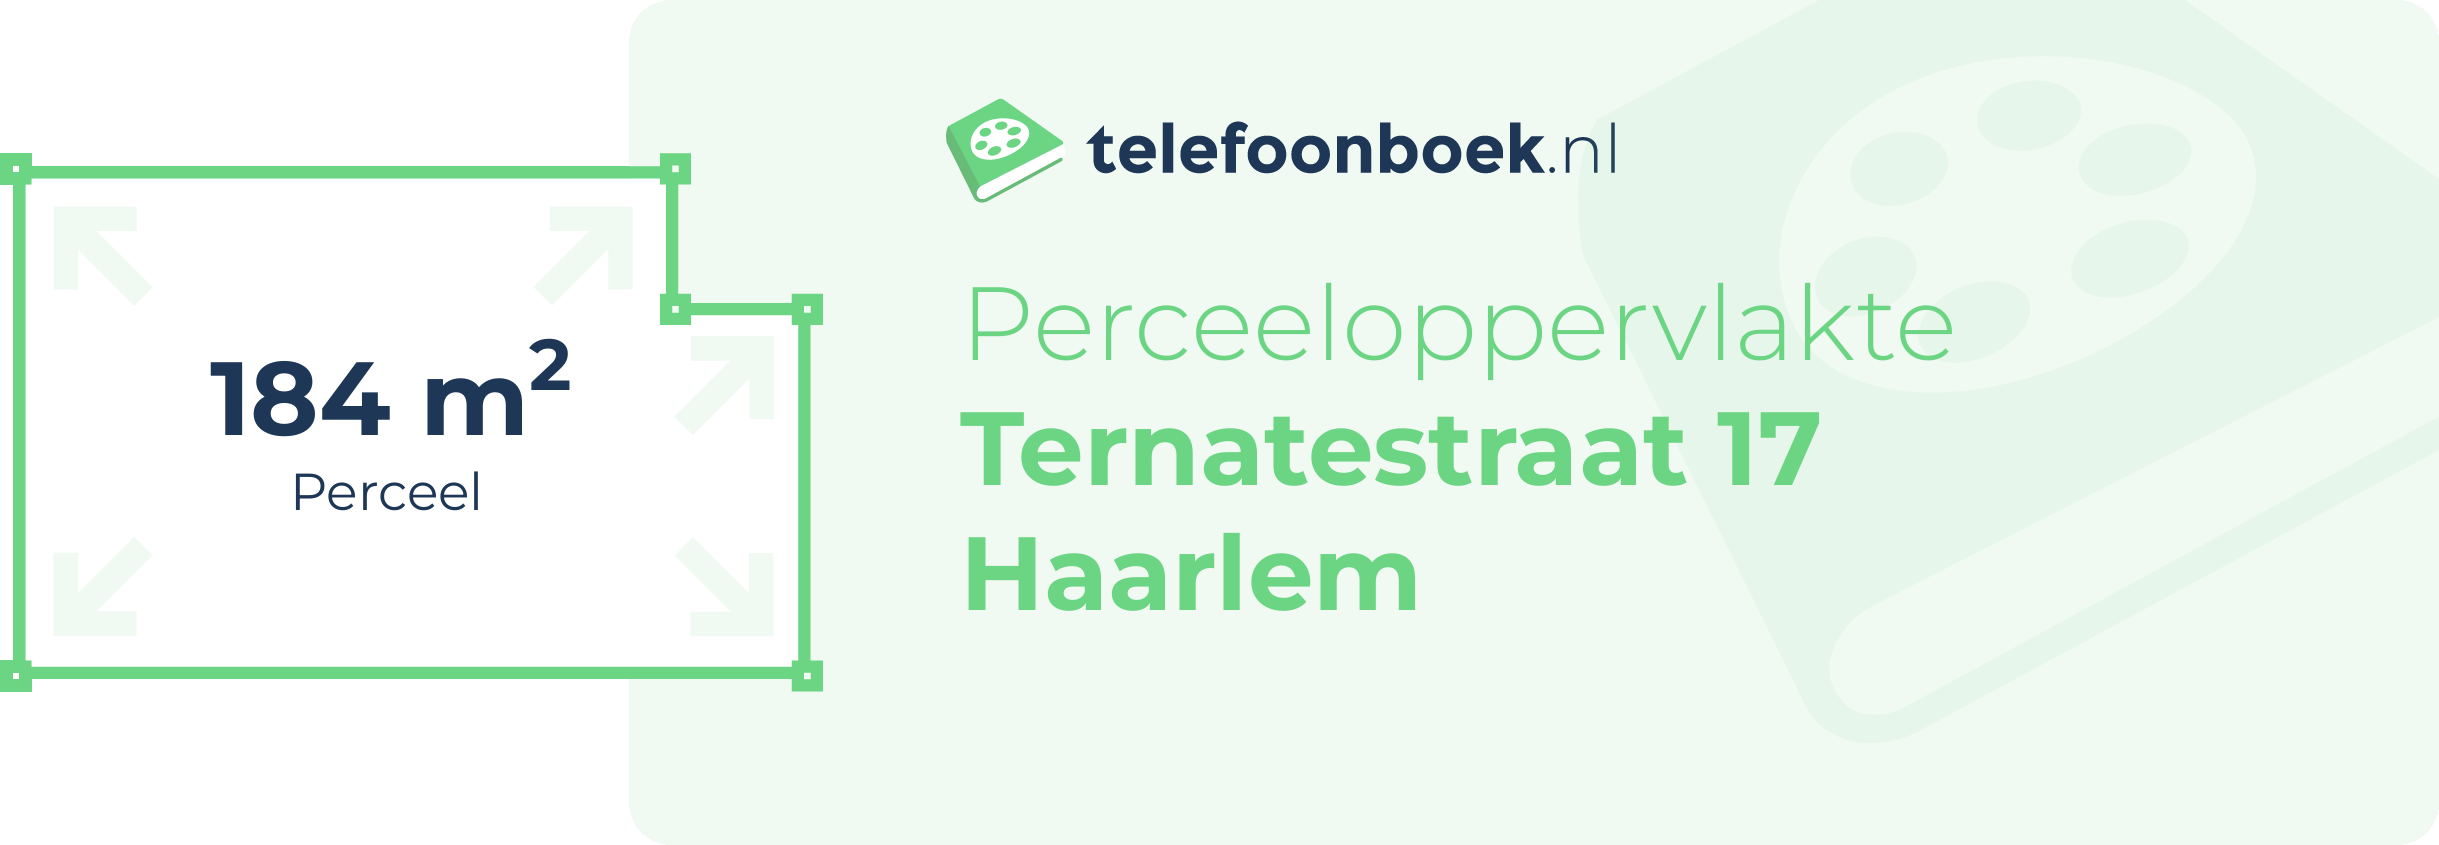 Perceeloppervlakte Ternatestraat 17 Haarlem